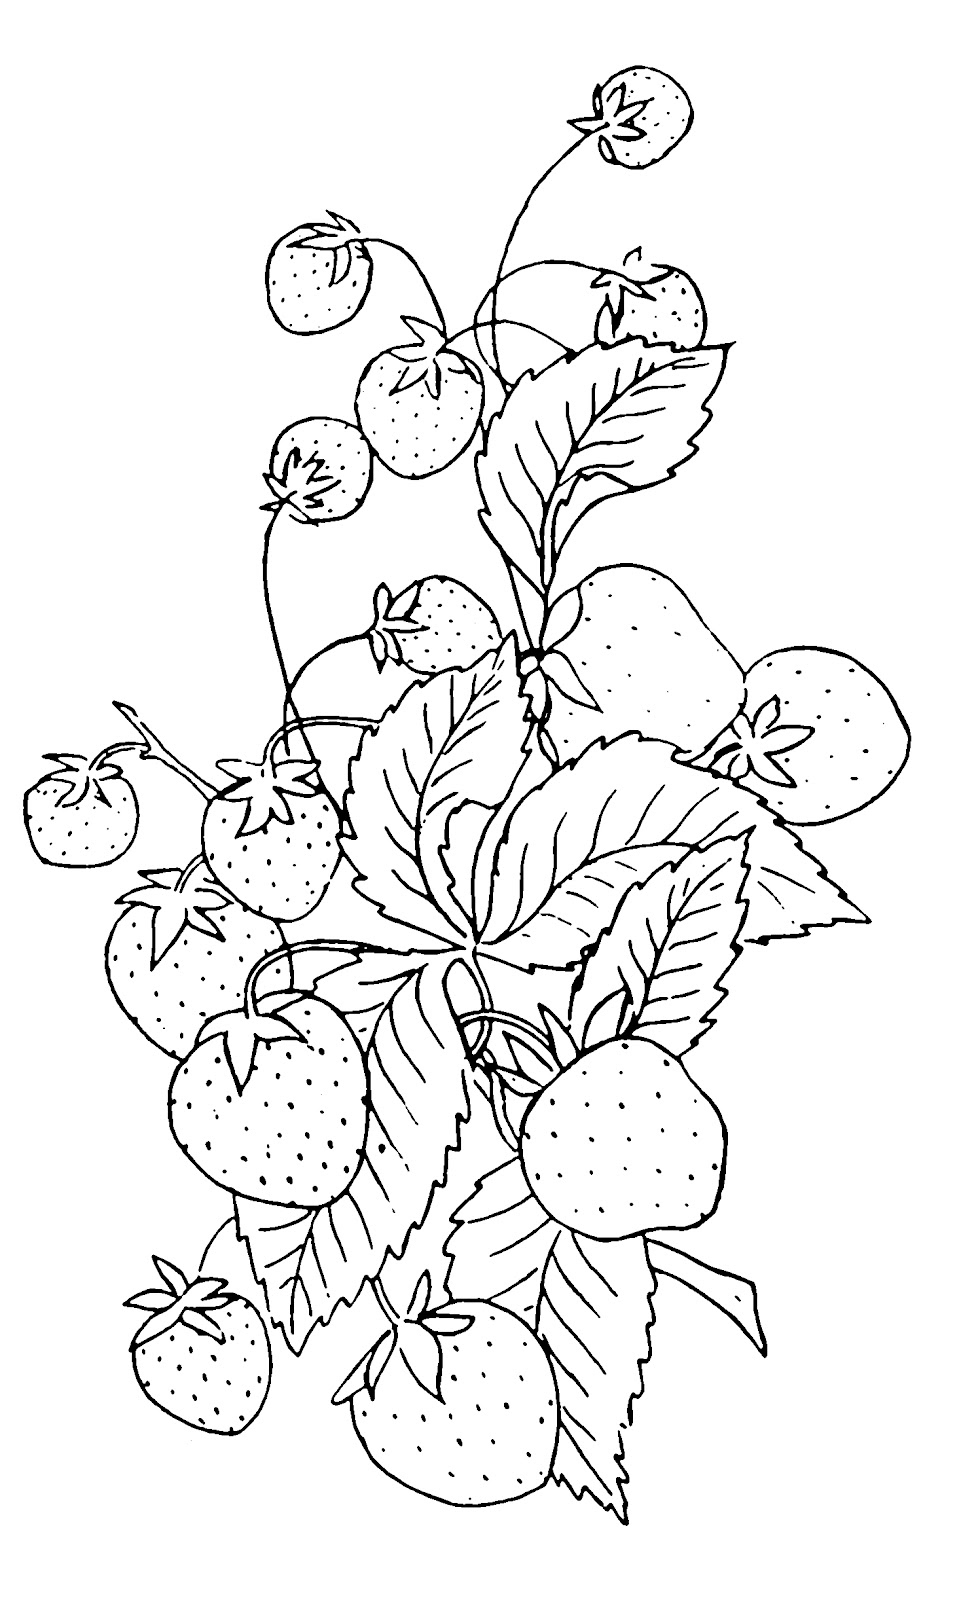 Strawberry Embroidery Pattern